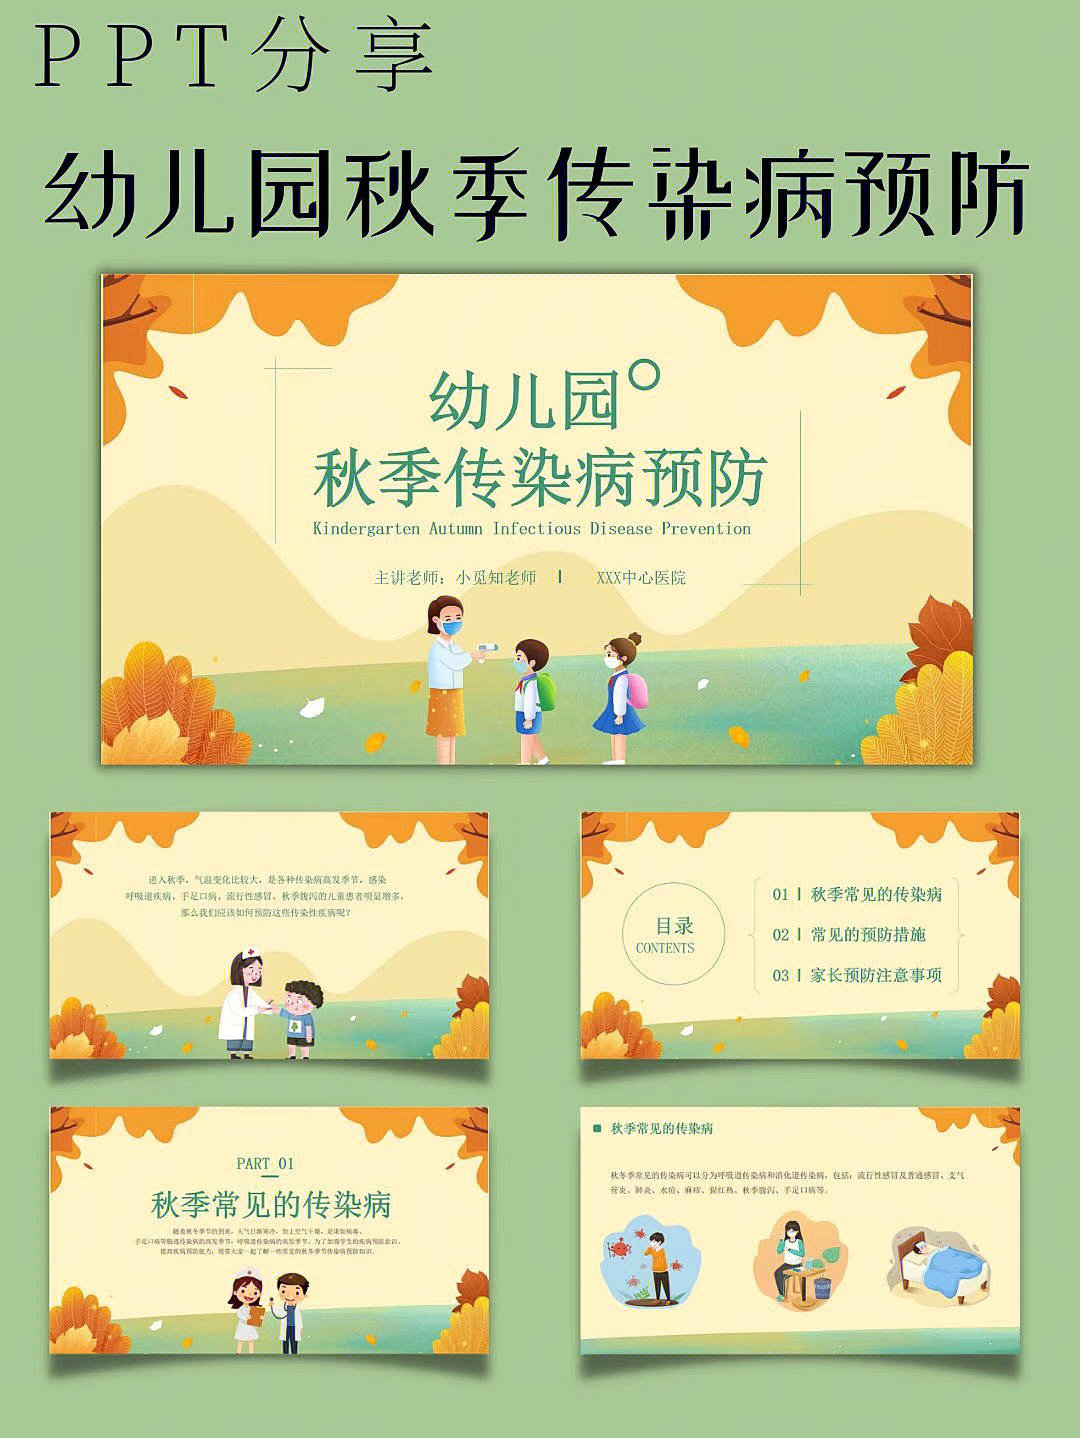 ppt模板分享幼儿园秋季传染病预防教育模